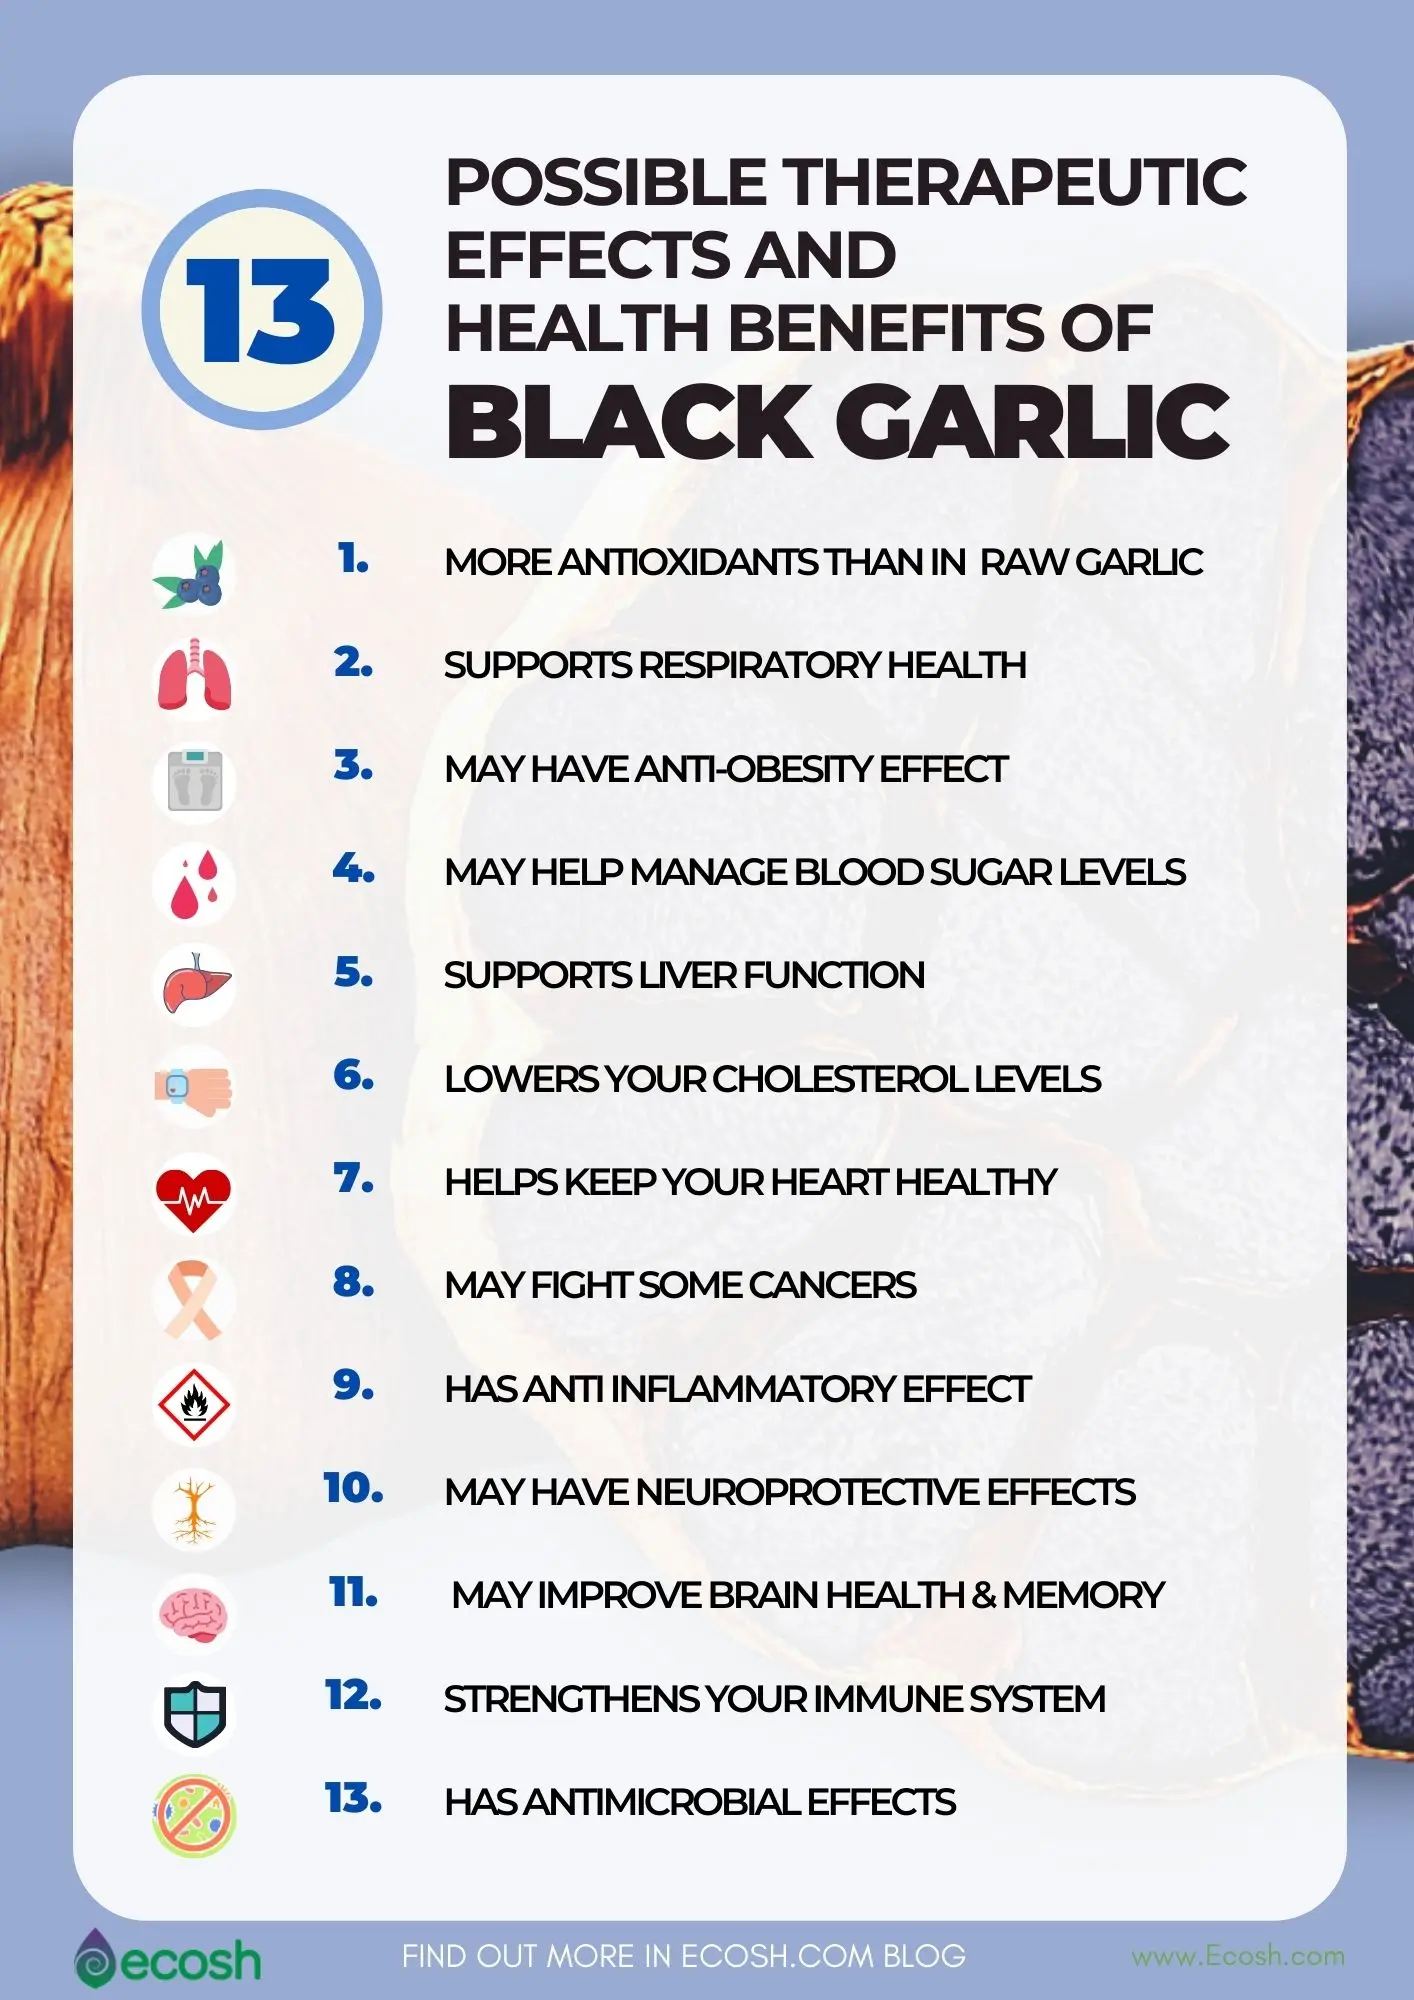 smoked garlic health benefits - Is burnt garlic good for health